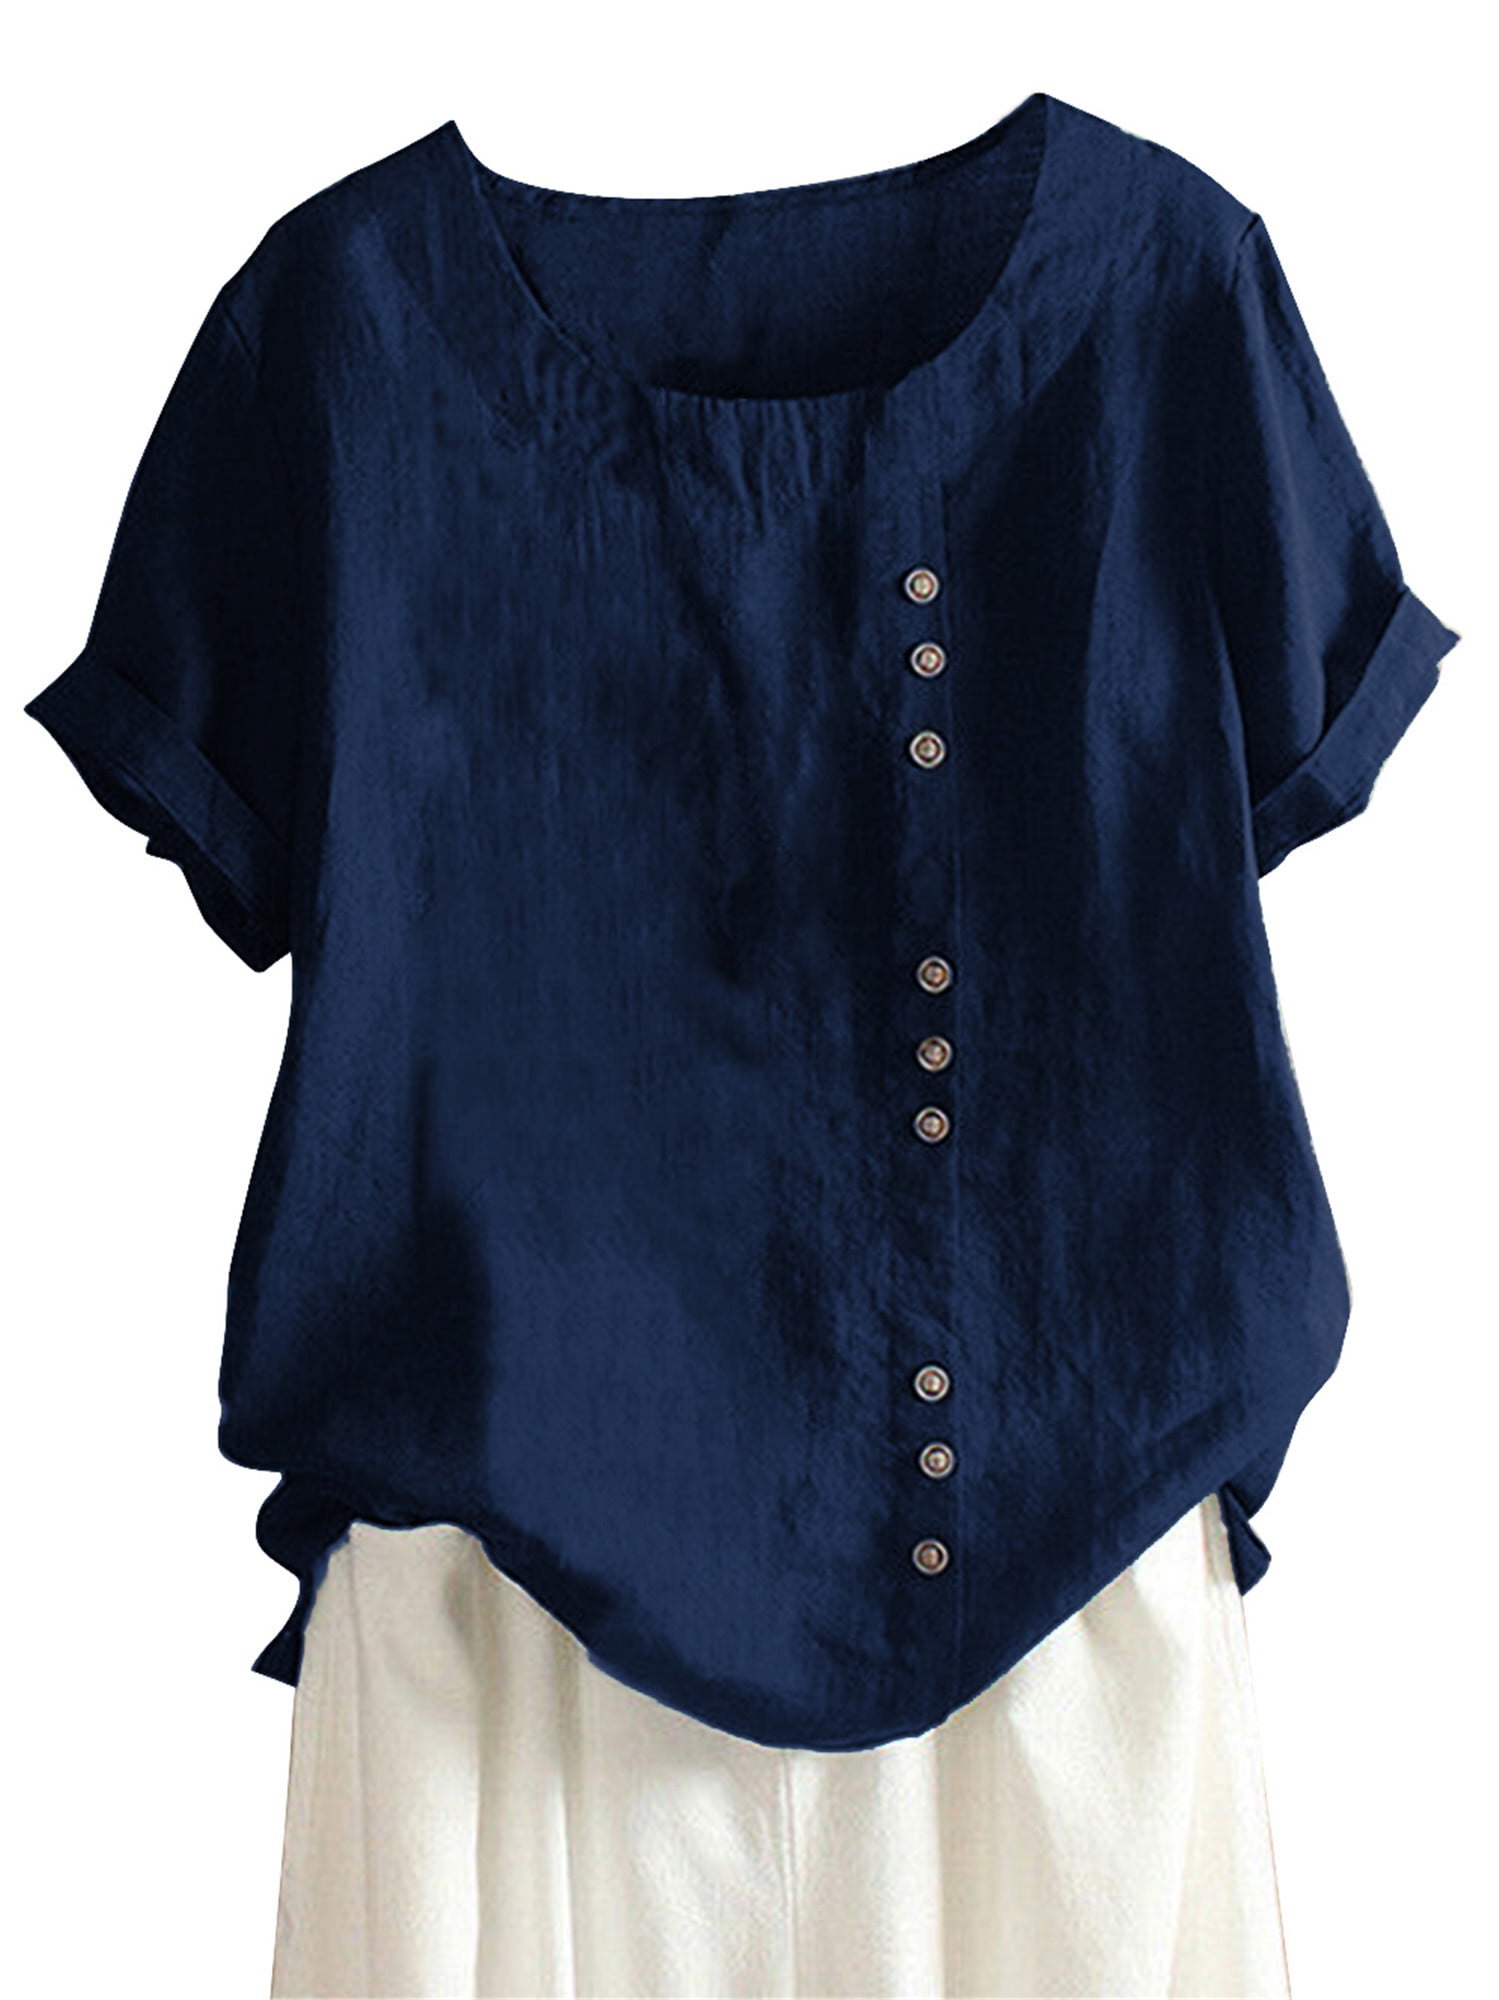 Aunavey Women's Cotton Linen T-Shirts Short Sleeve Tunic Tops Casual ...